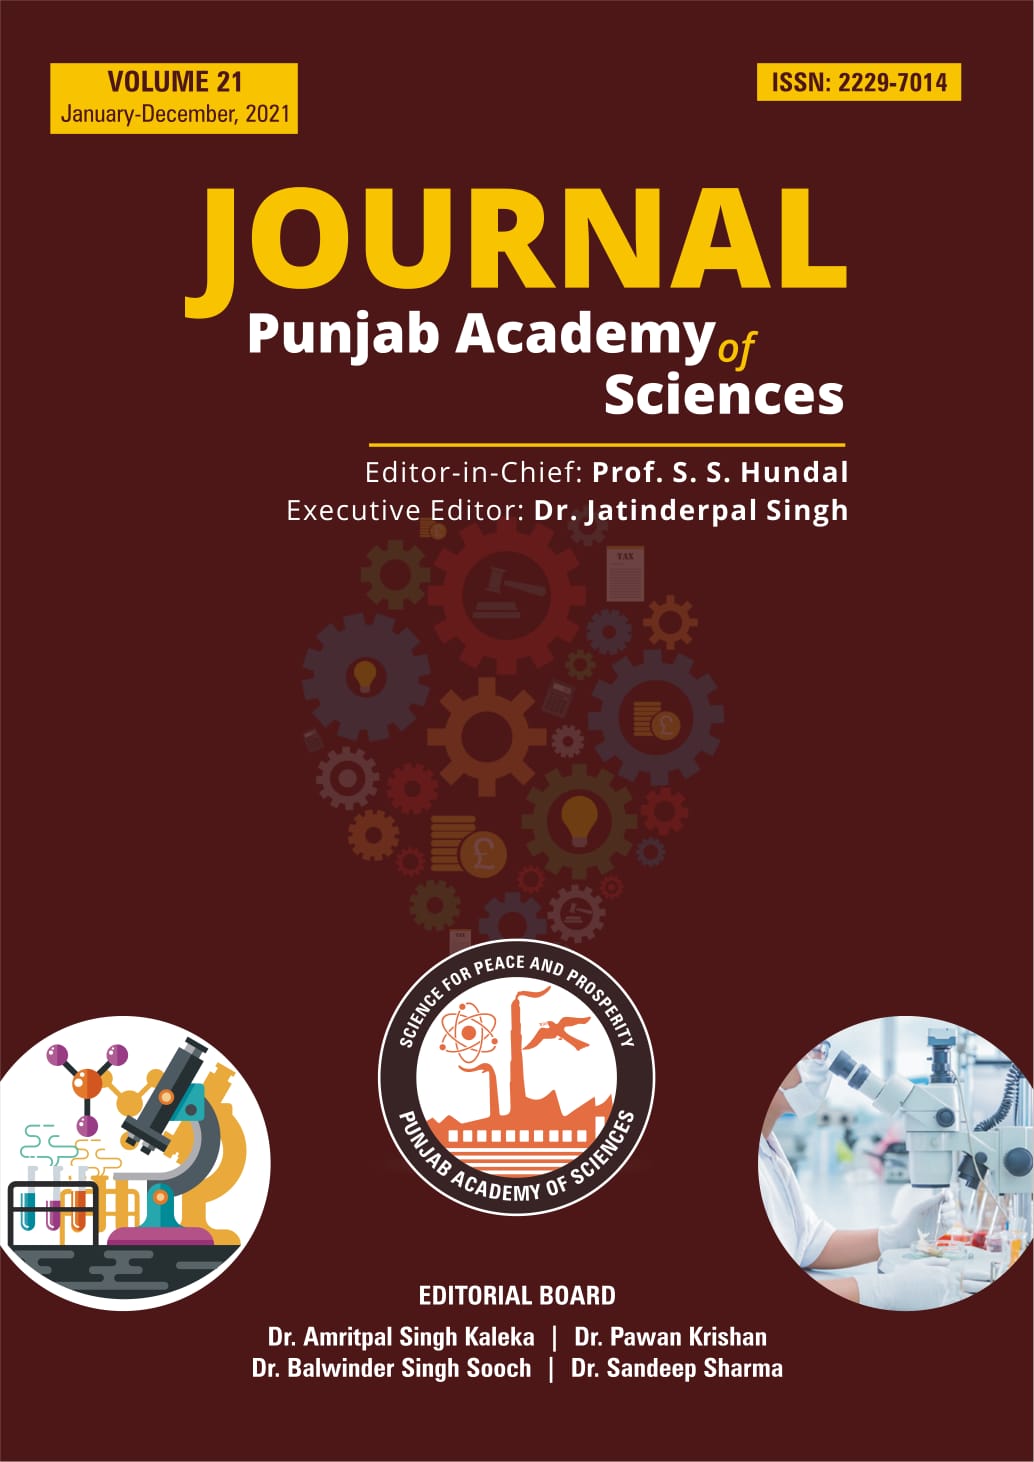 					View Vol. 21 (2021): JOURNAL PUNJAB ACADEMY OF SCIENCES
				